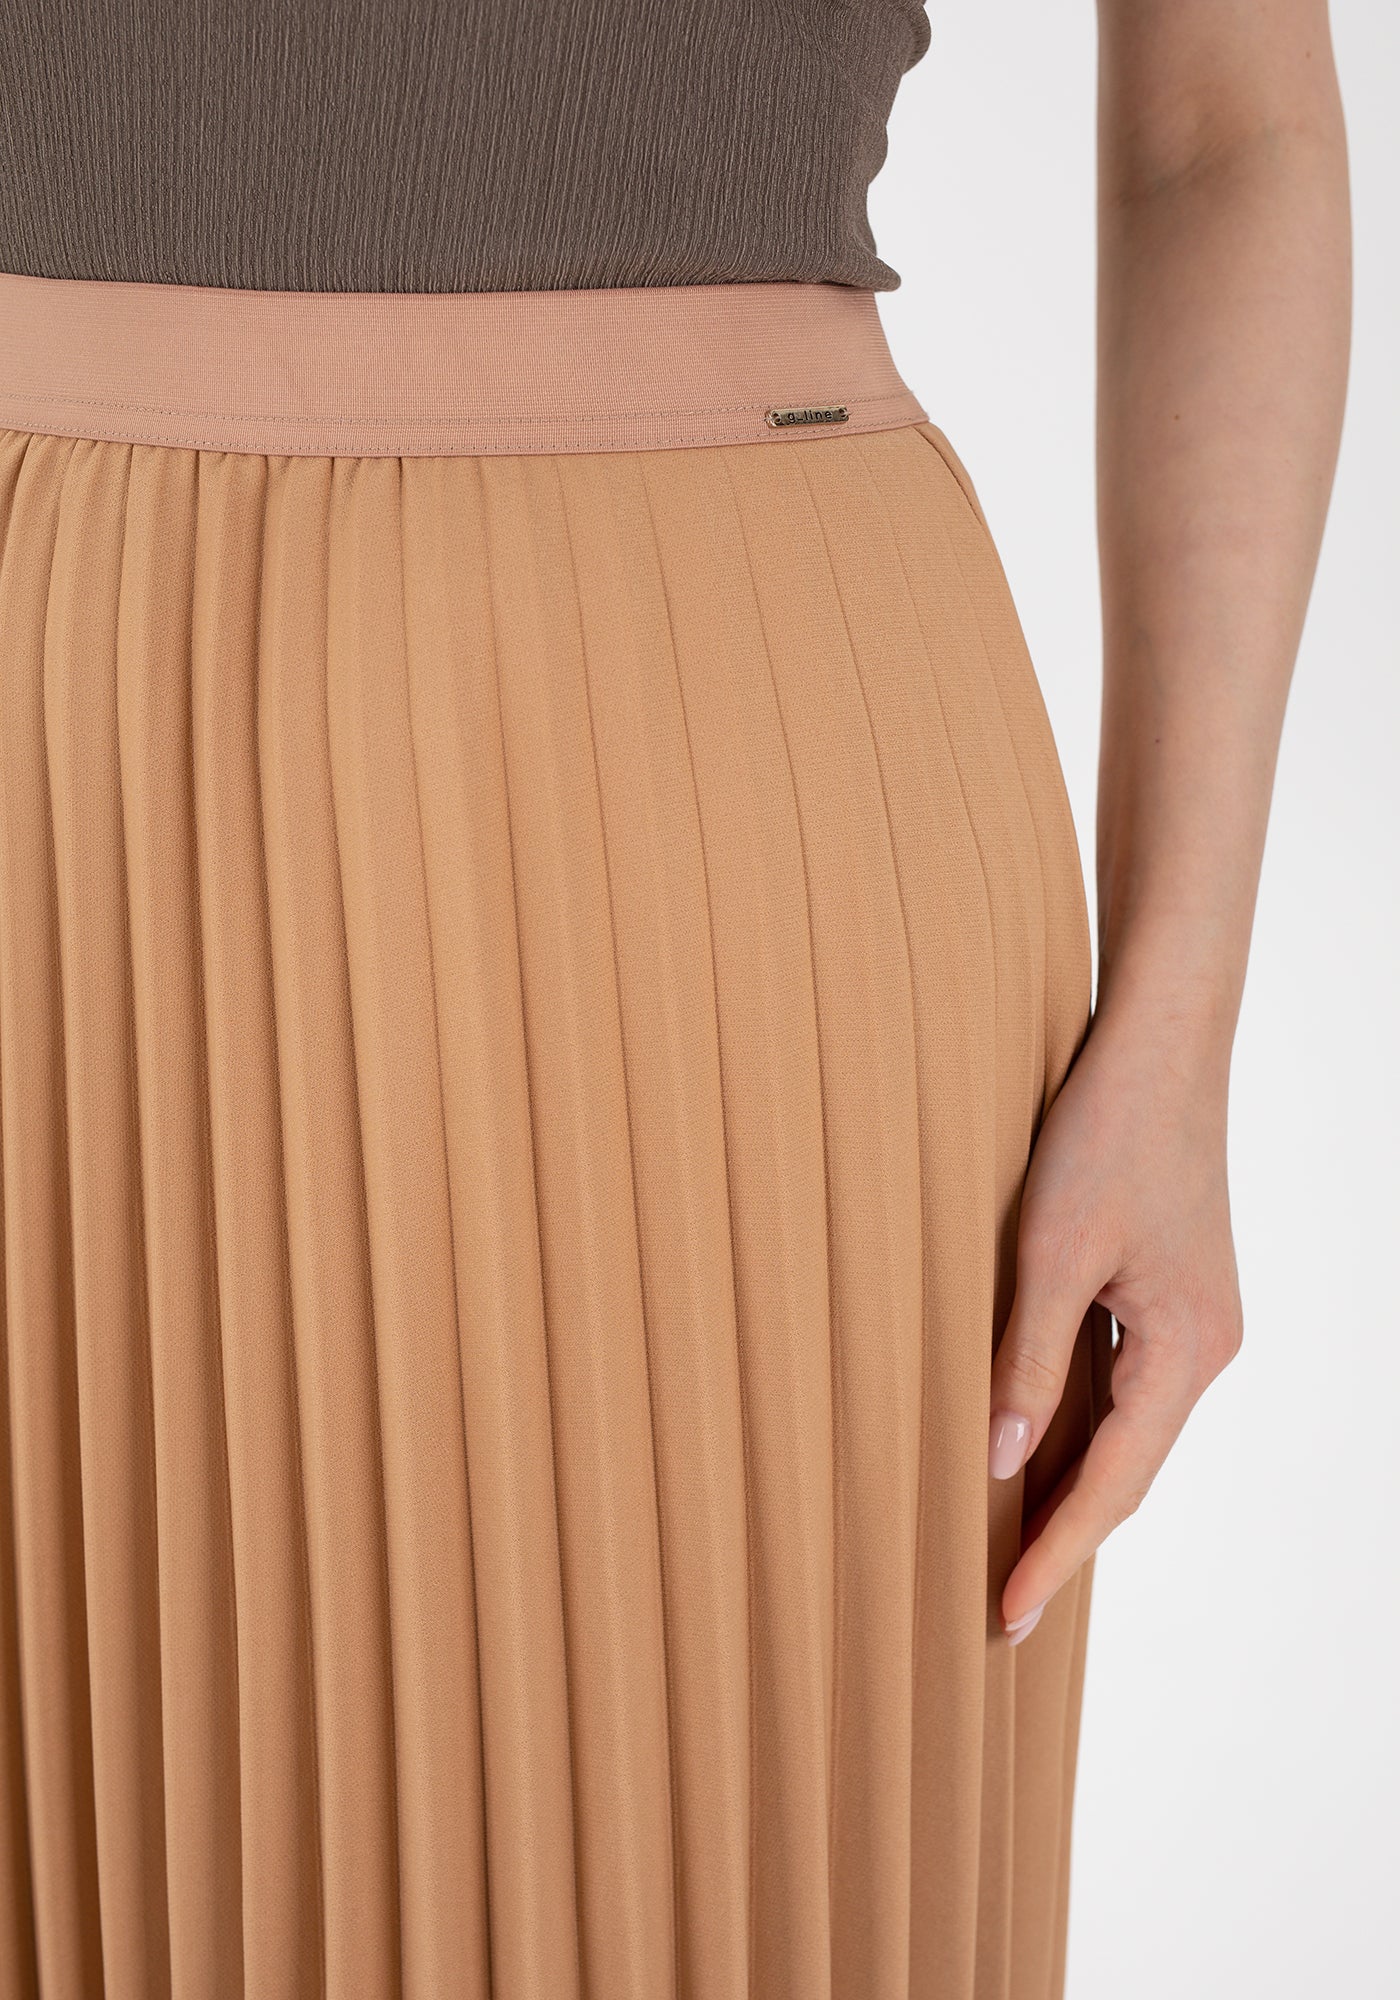 Camel Pleated Maxi Skirt Elastic Waist Band Ankle Length Plisse Skirt G-Line